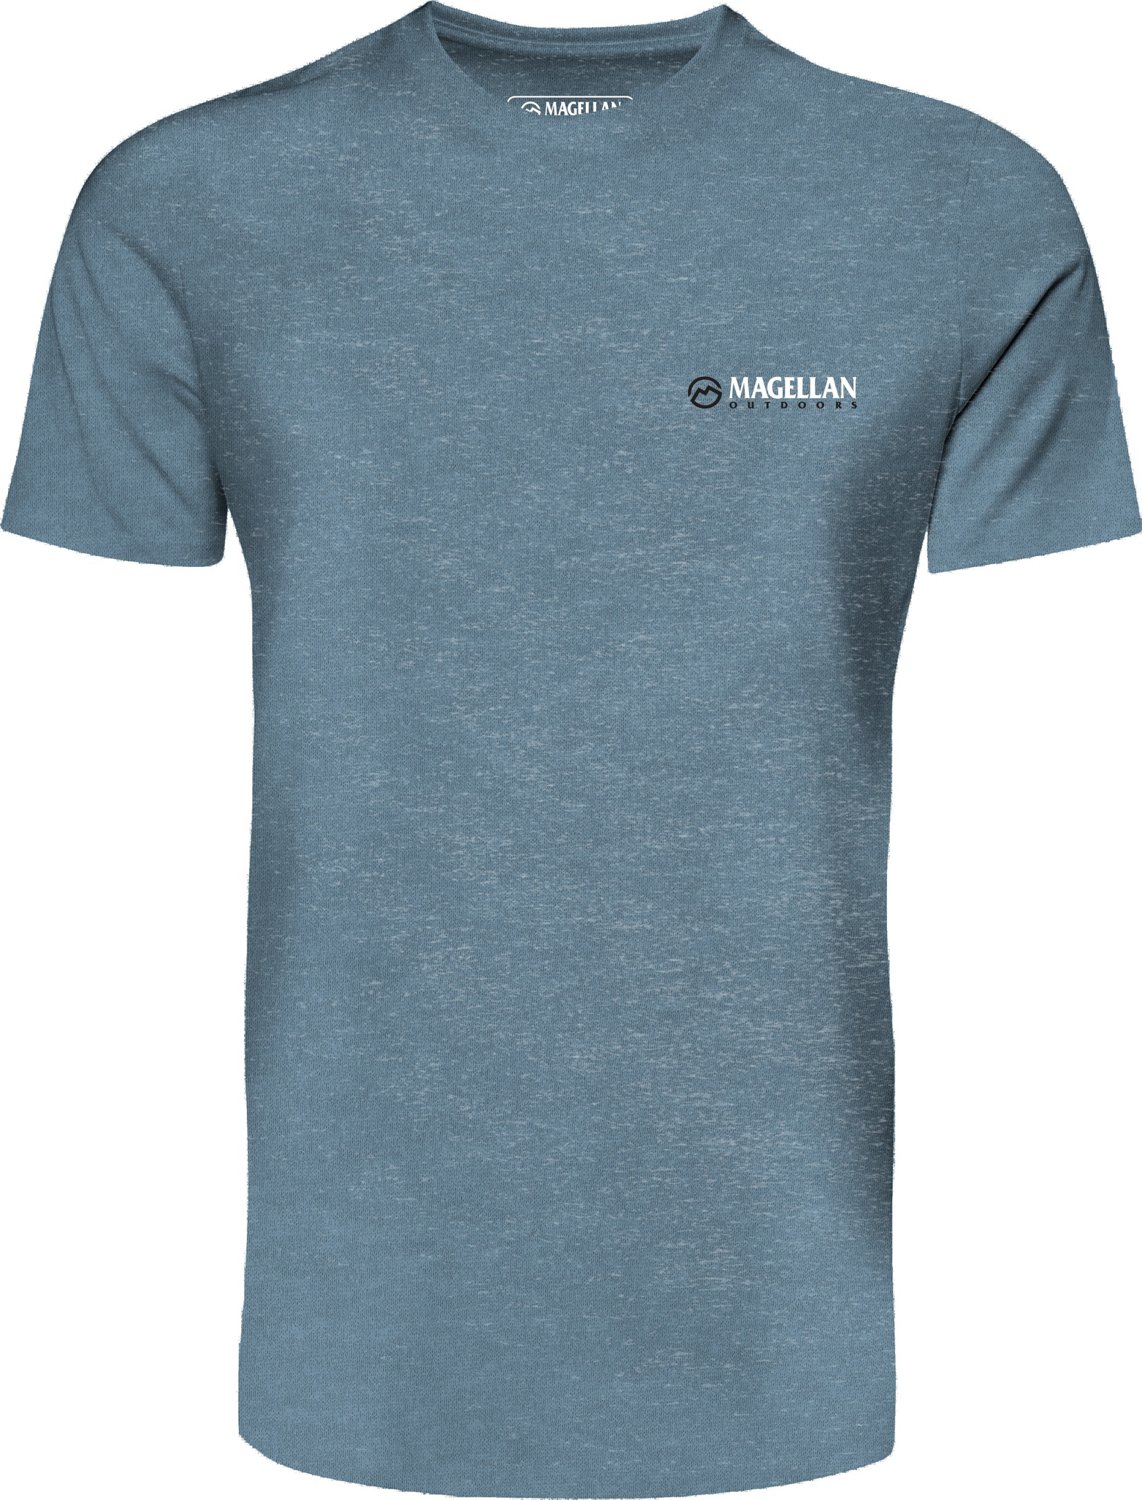 Magellan Top & T-Shirts for Boys (4+)